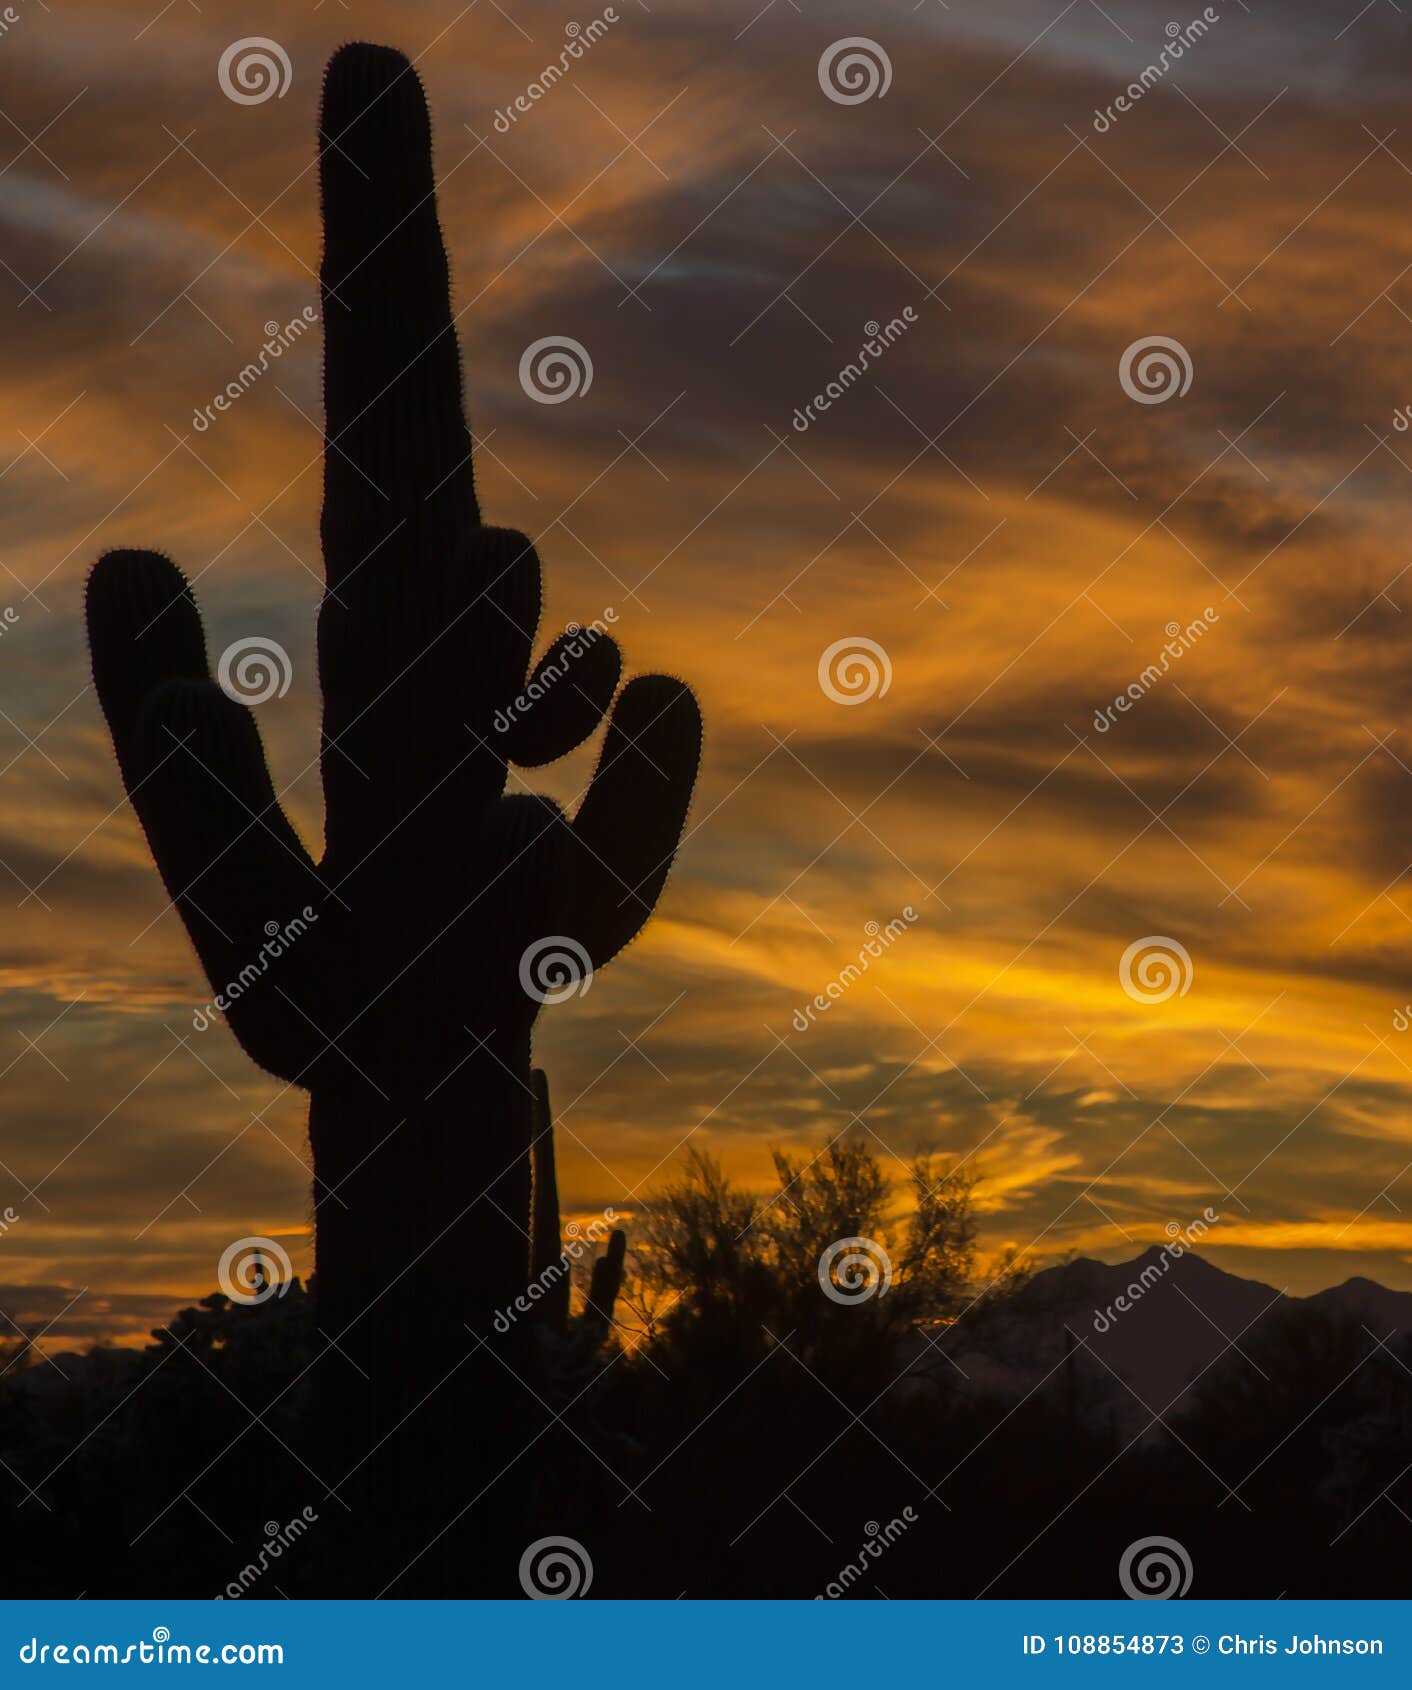 saguaros in the desert sunset. cactus has dramatic shadows